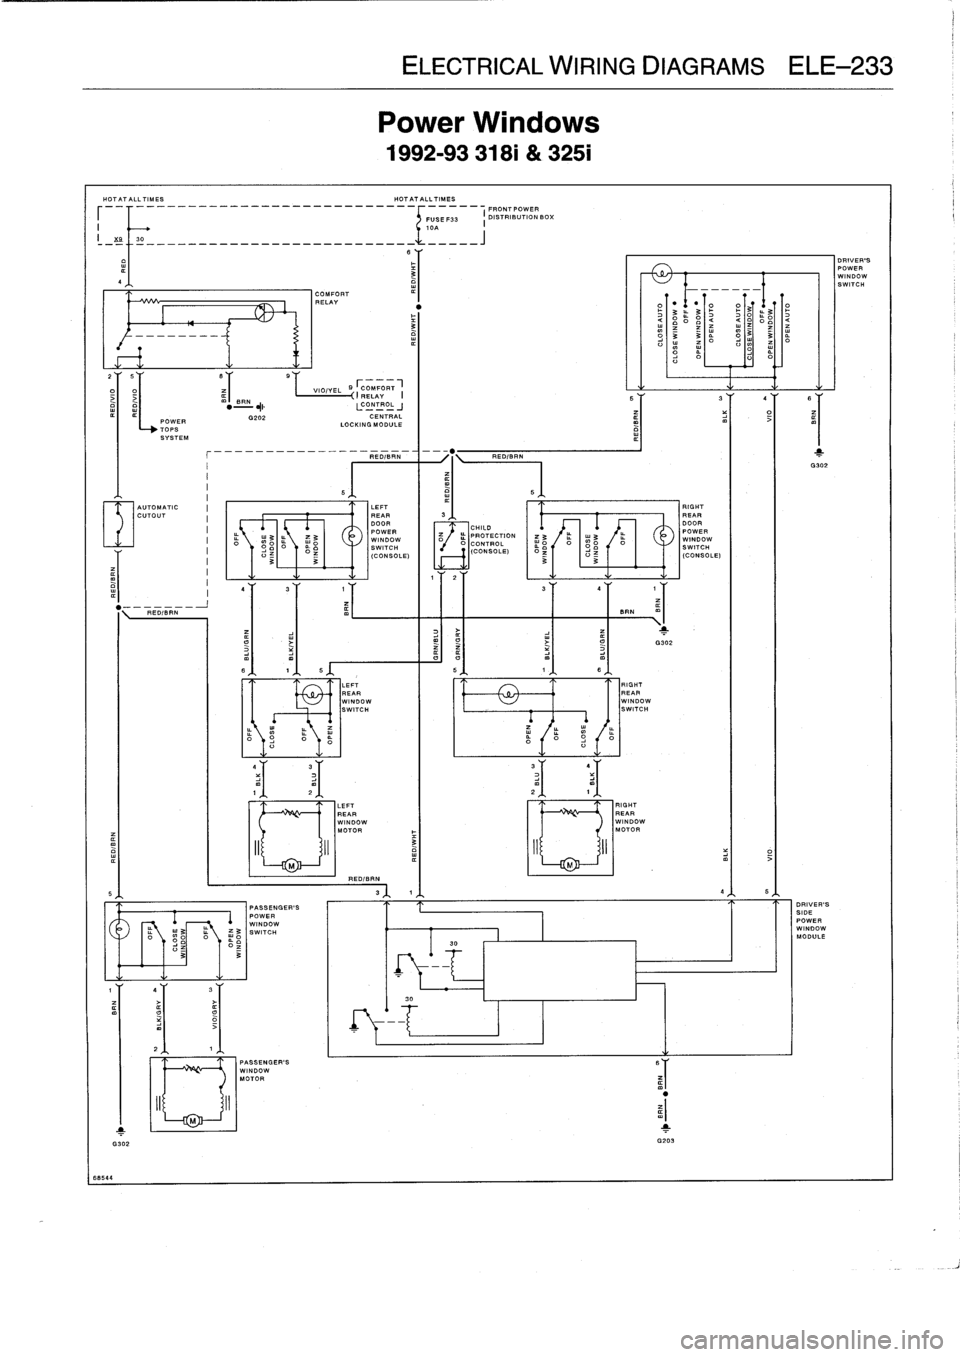 BMW 318i 1997 E36 Workshop Manual 
HO7A7AlL71ME5

	

HOTATALLTIMES

r
--

68544

i

*---AAA
POWER

AUTOMATIC
CUTOUT

O

PASSENGERS
WINDOWMOTOR

V
1
G3D2

B
r
COMFDRT~
VIOIYEL
(IRELAY
I

ELECTRICAL
WIRING
DIAGRAMS
ELE-233

Power
Windo